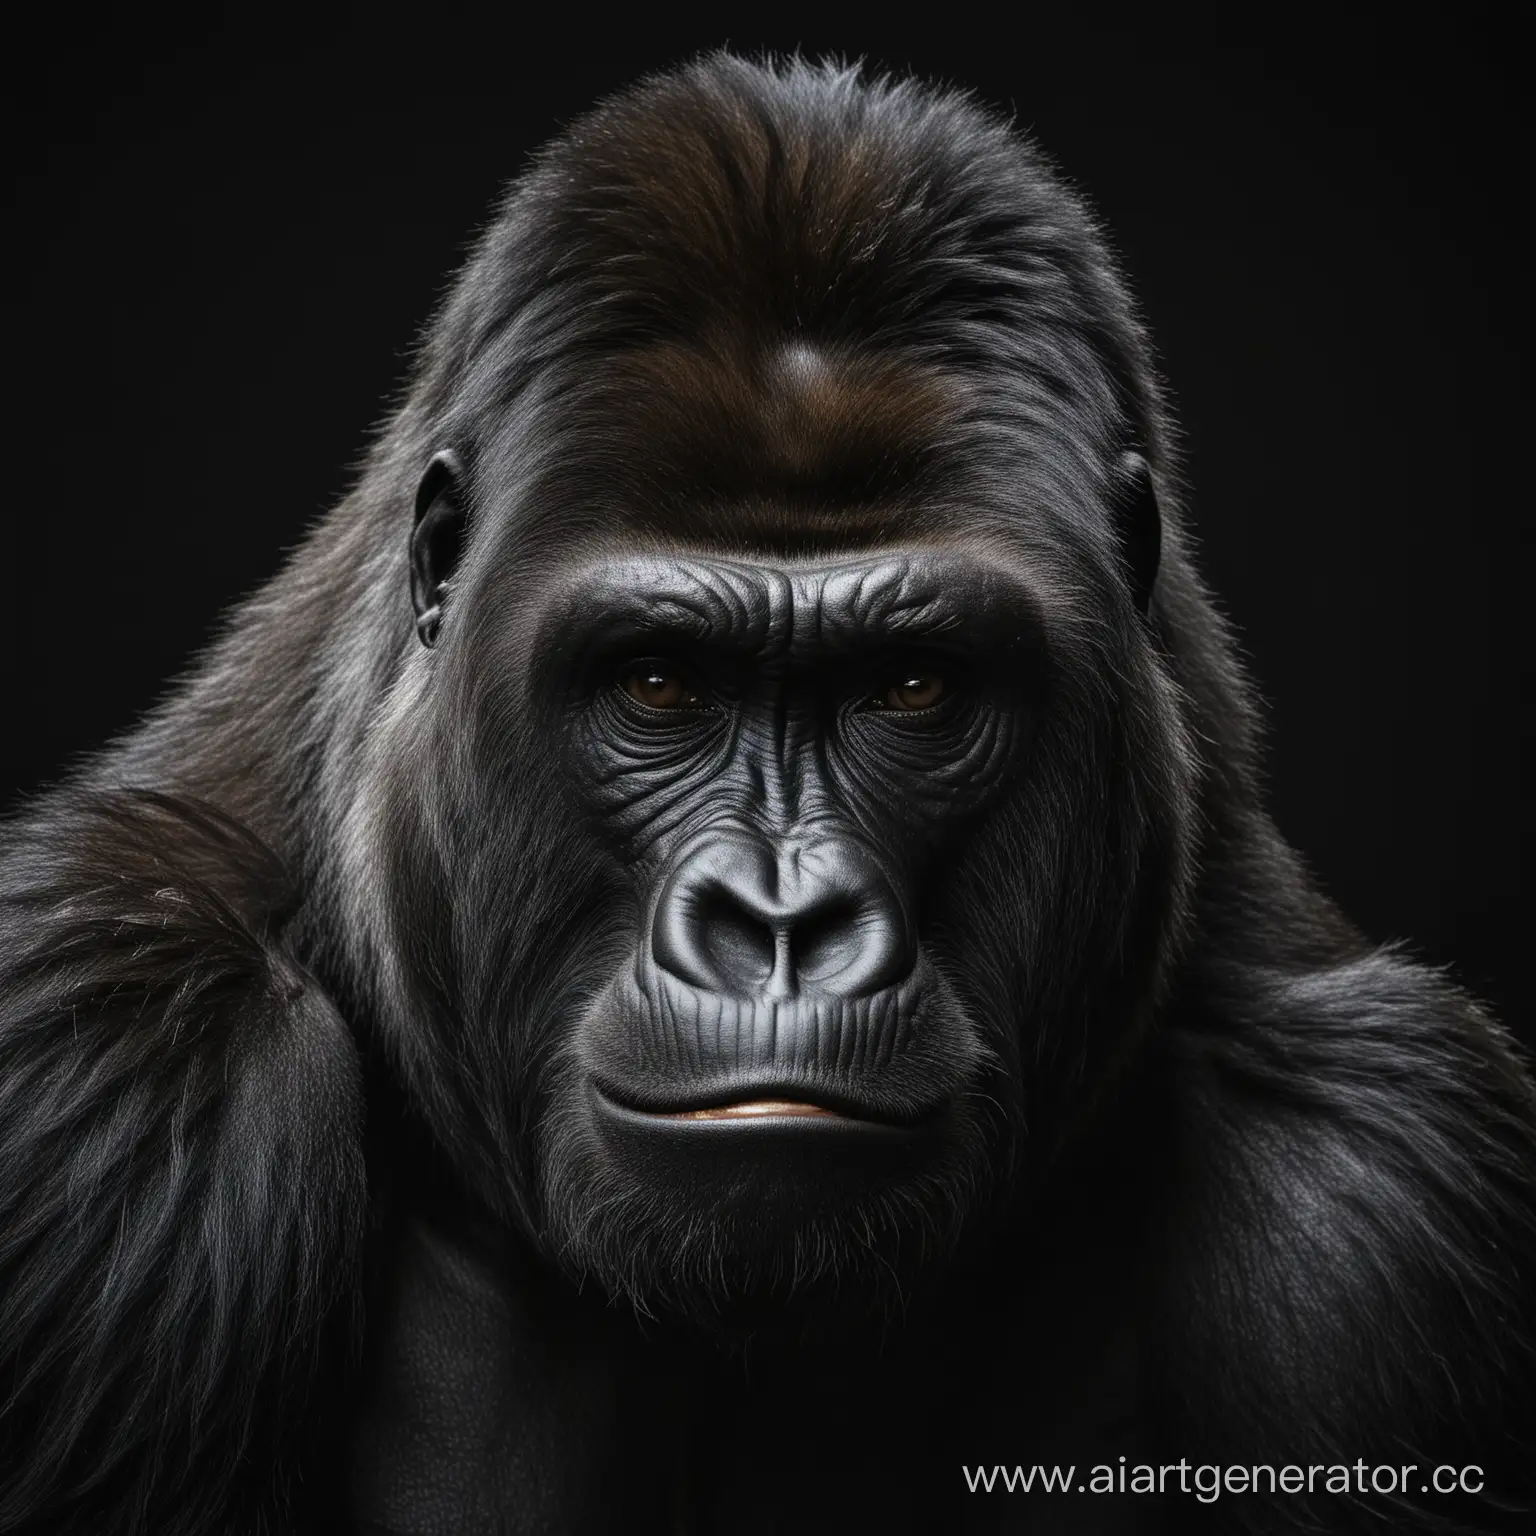 Majestic-Gorilla-Portrait-on-Black-Background